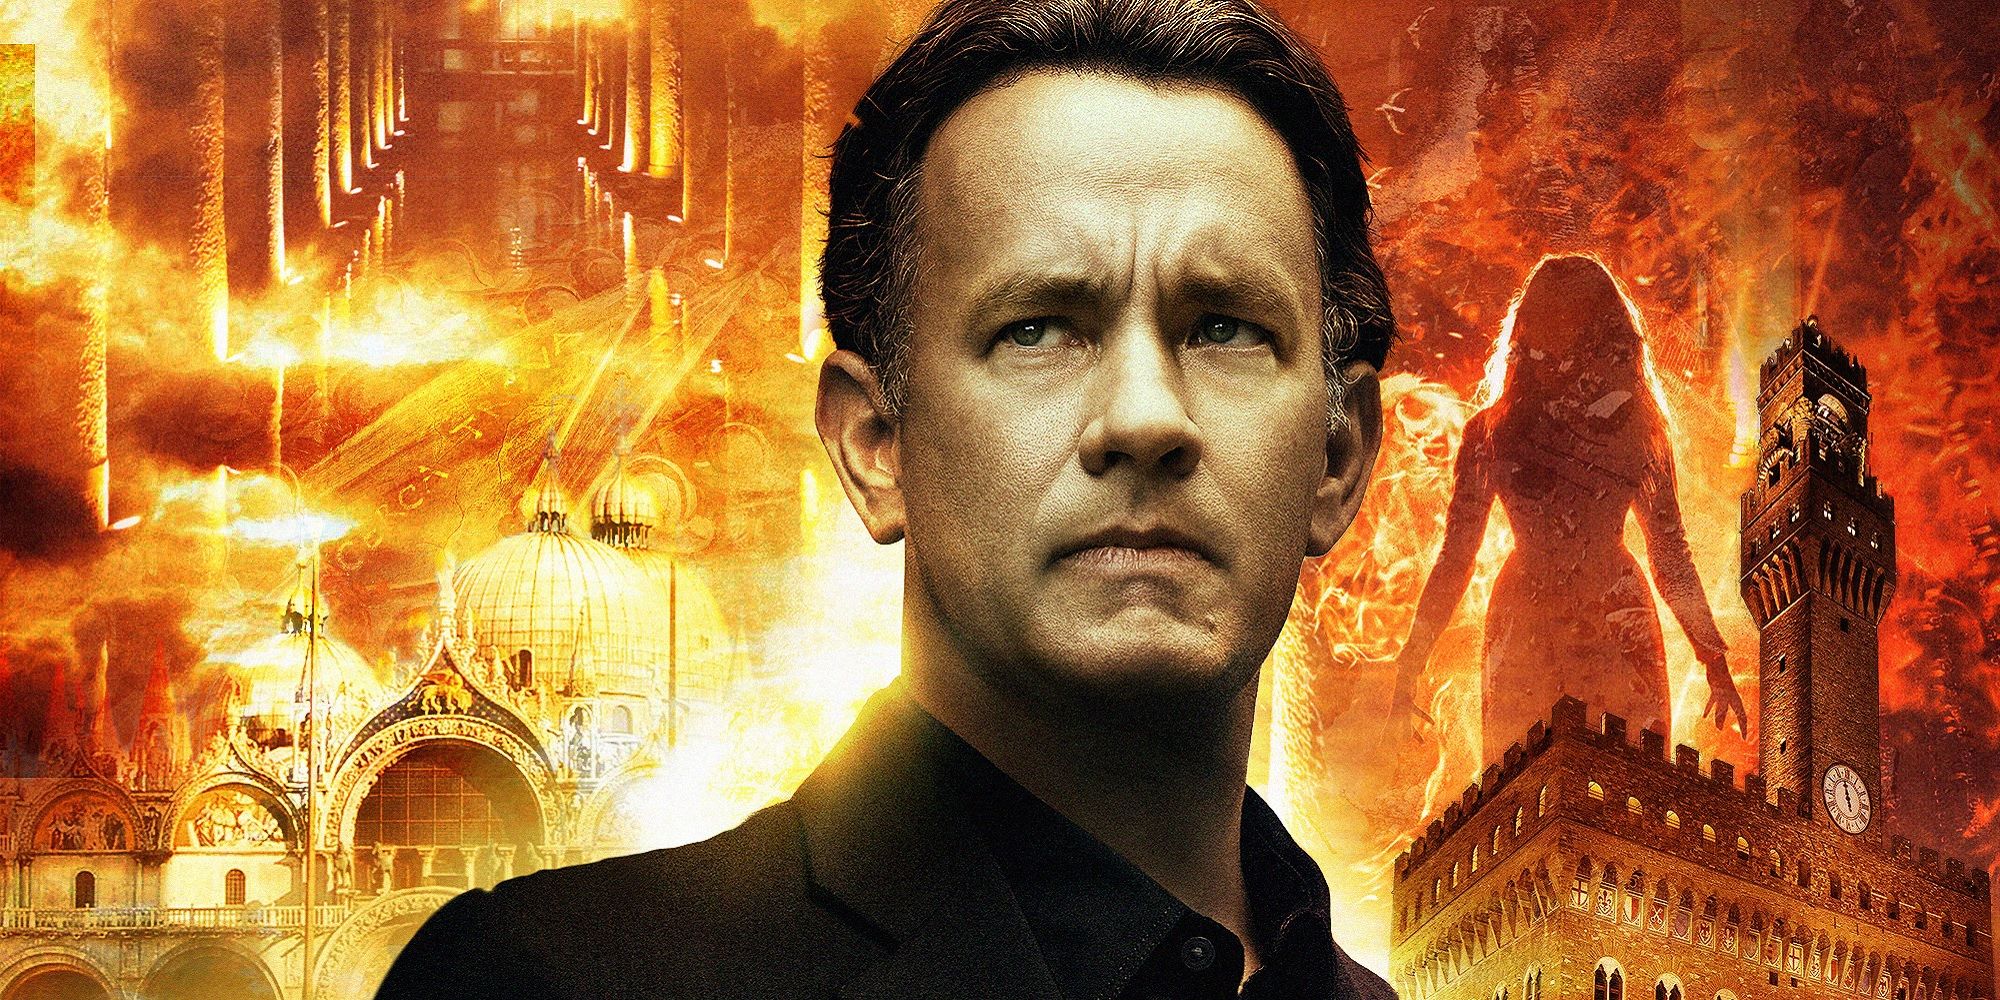 Inferno Trailer: Tom Hanks' Robert Langdon Faces Hell On Earth